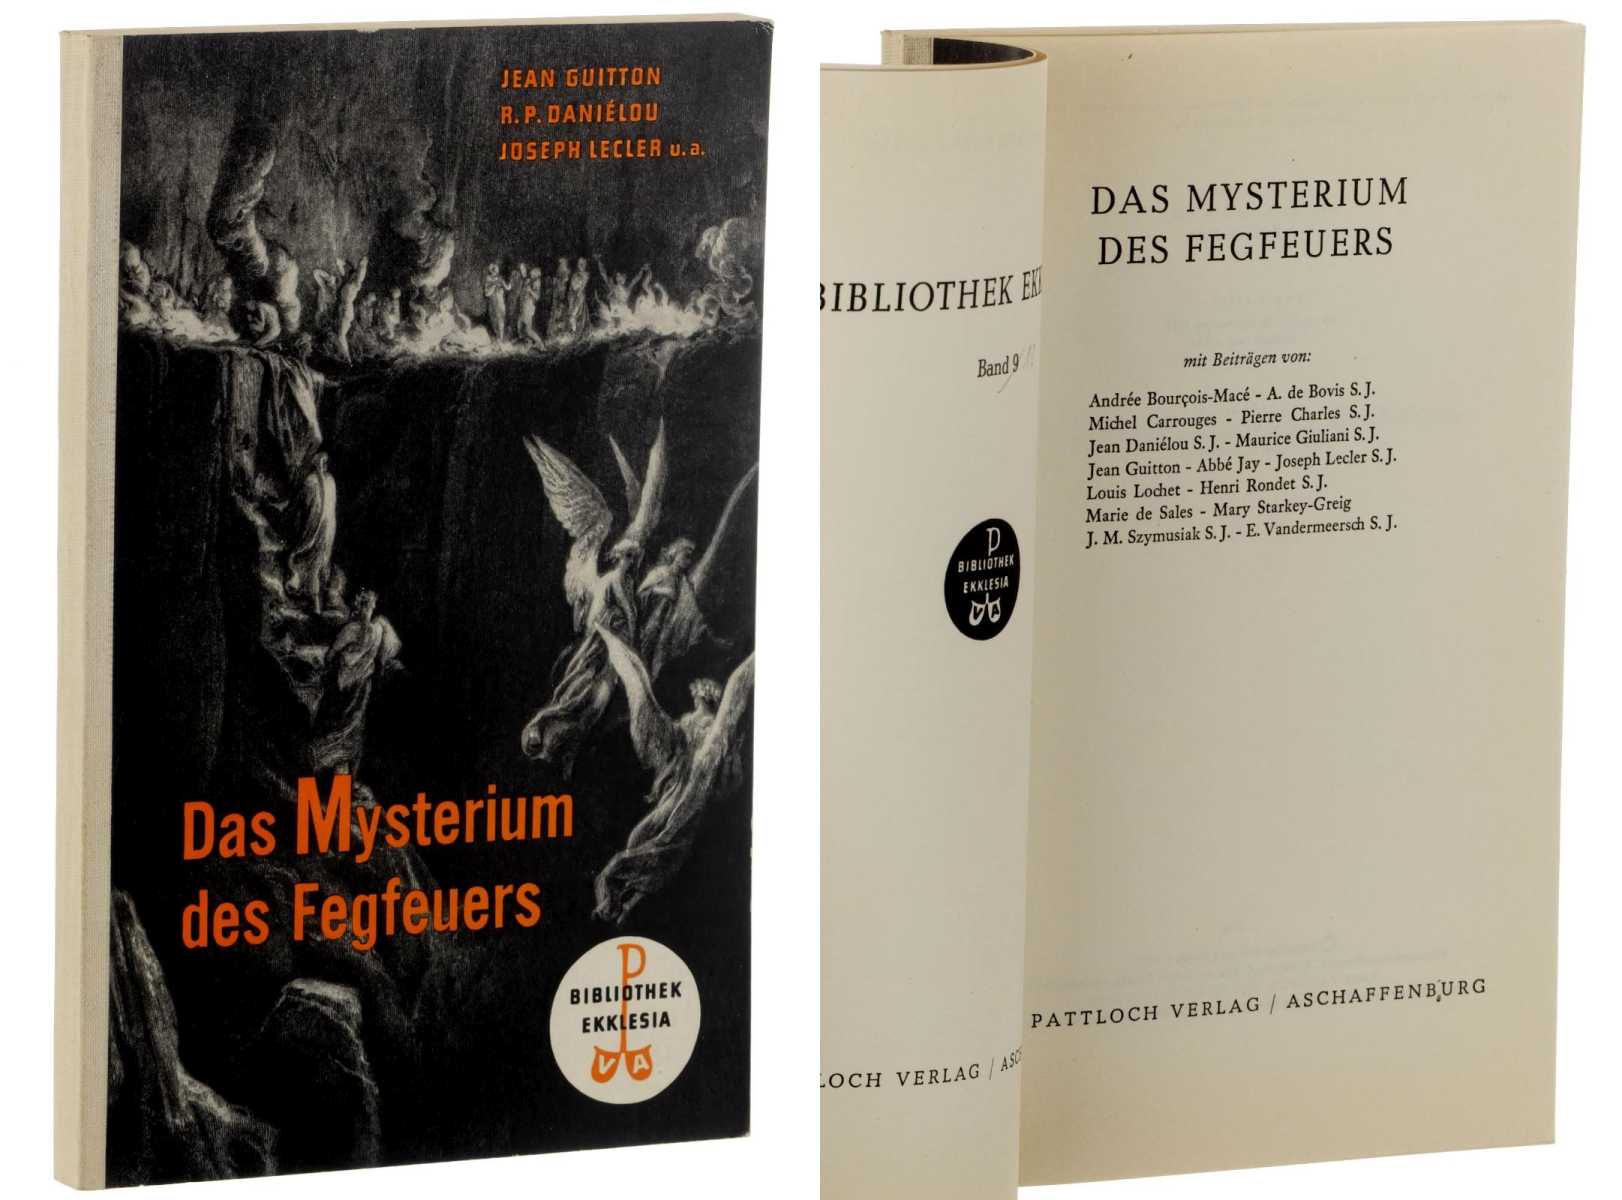   Das Mysterium des Fegfeuers. Mit Beiträgen von Jean Guitton, Jean Daniélou, Joseph Lecler u.a. 